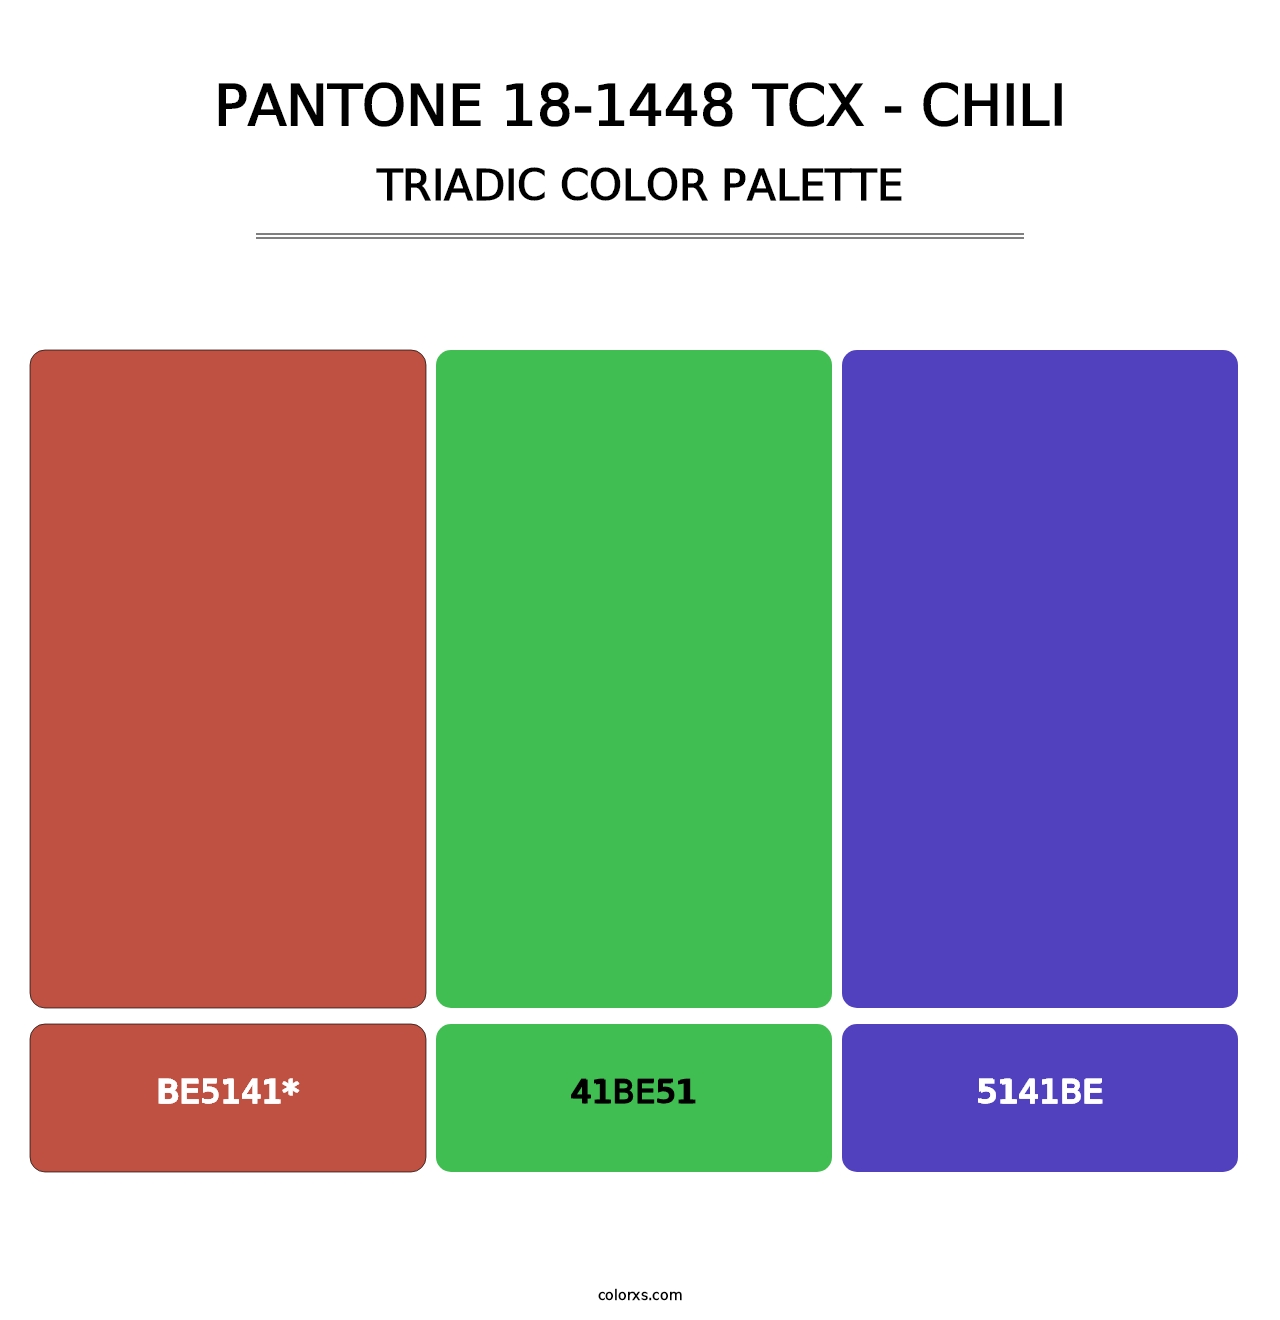 PANTONE 18-1448 TCX - Chili - Triadic Color Palette